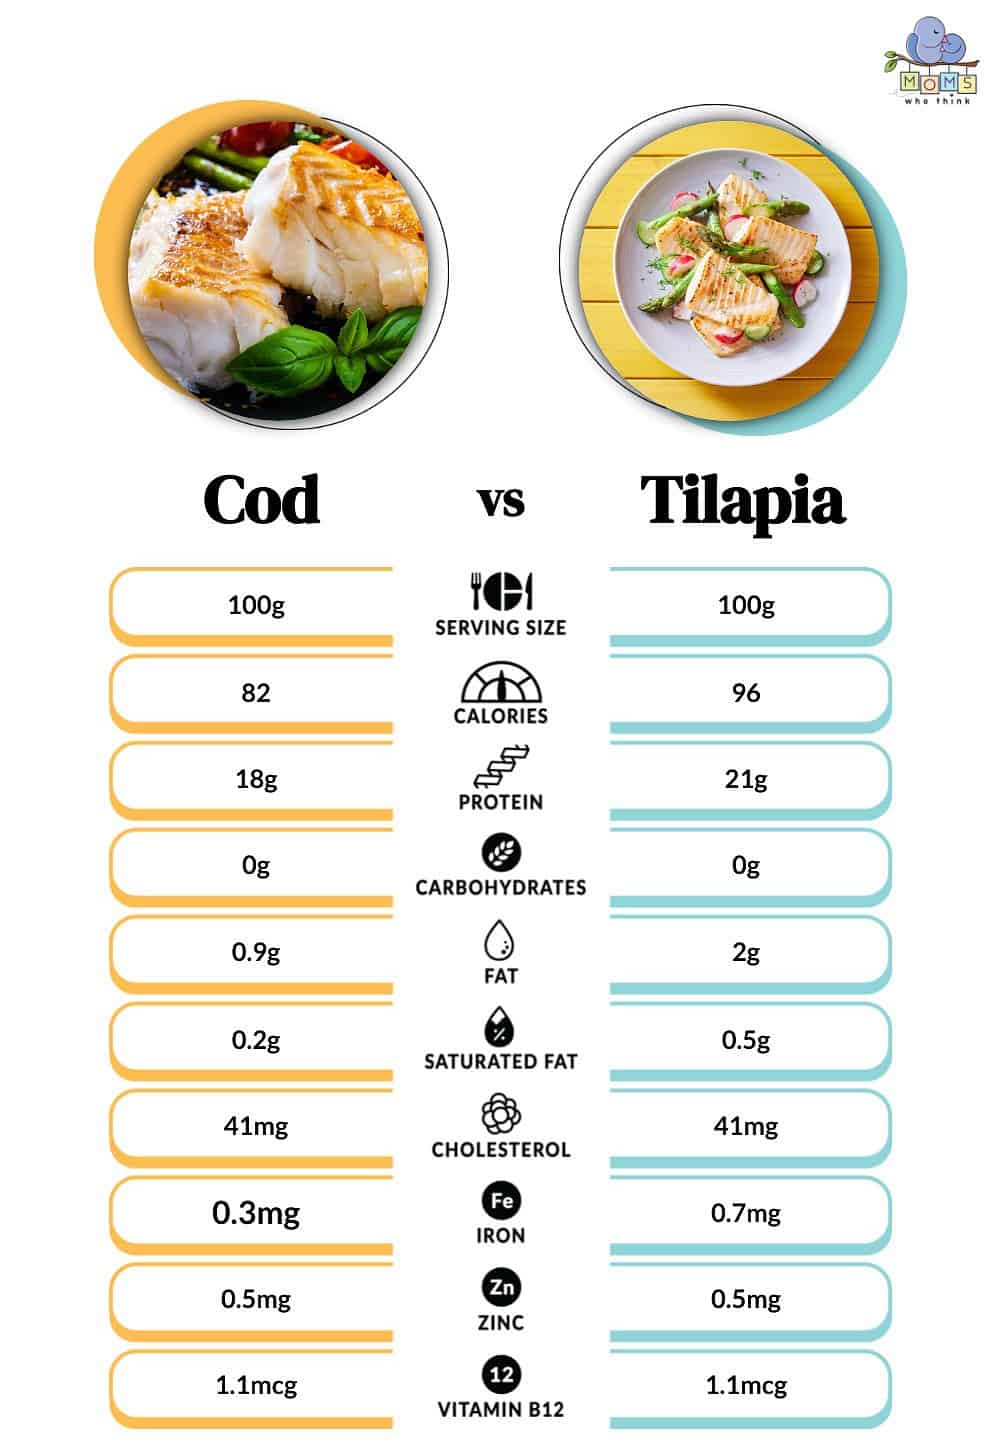 Cod vs Tilapia Nutritional Facts